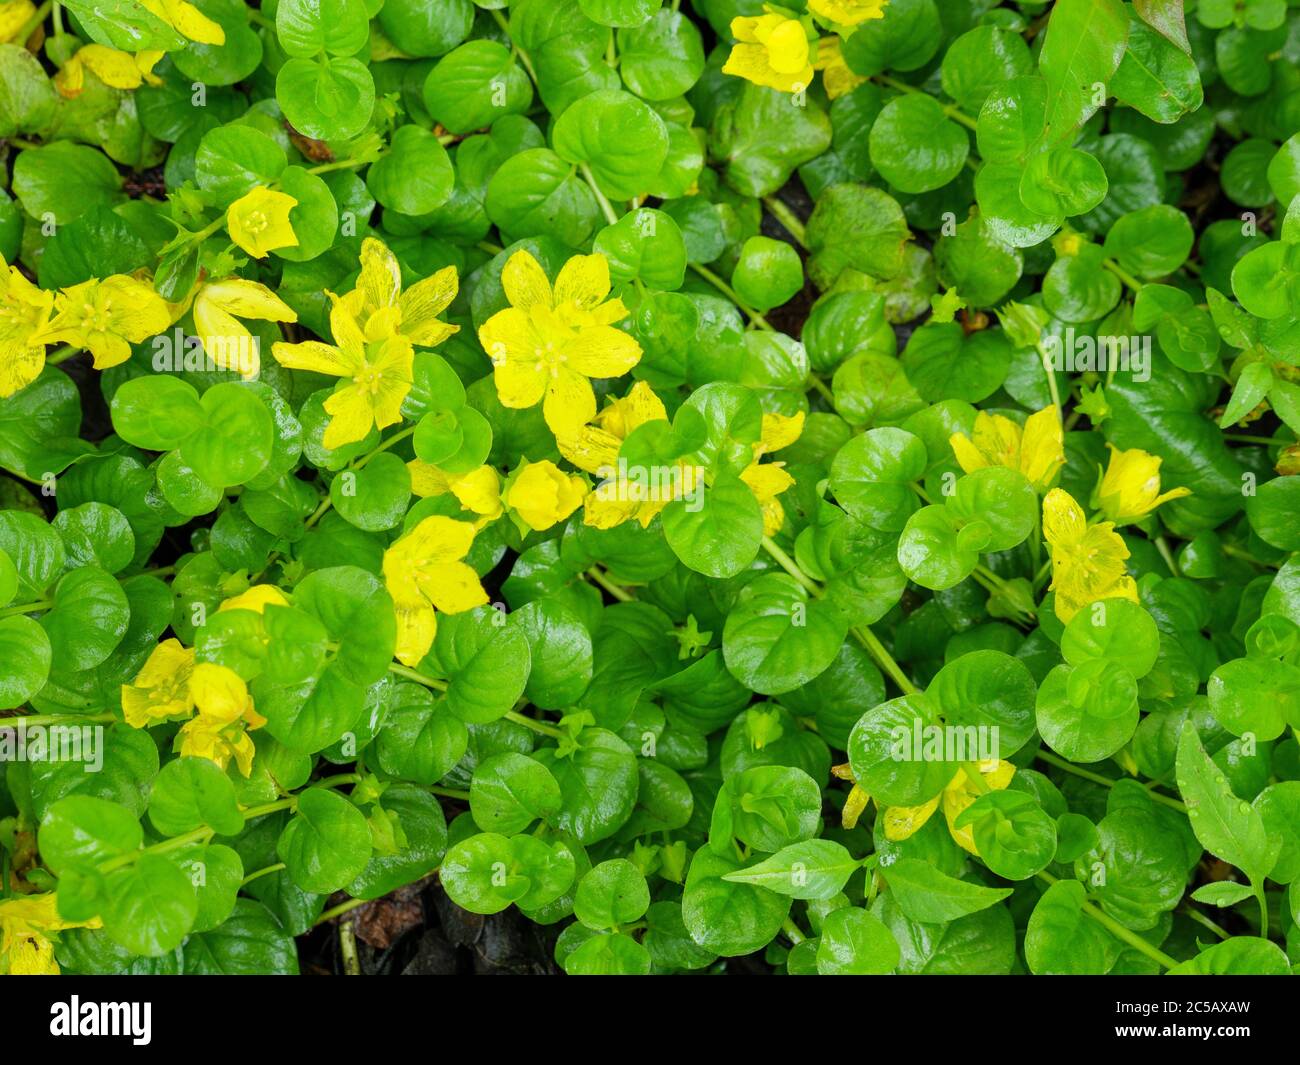 Moneywort or creeping jenny (Lysimachia nummularia), an invasive plant in North America. Salt Creek Nature Area Illinois. Stock Photo